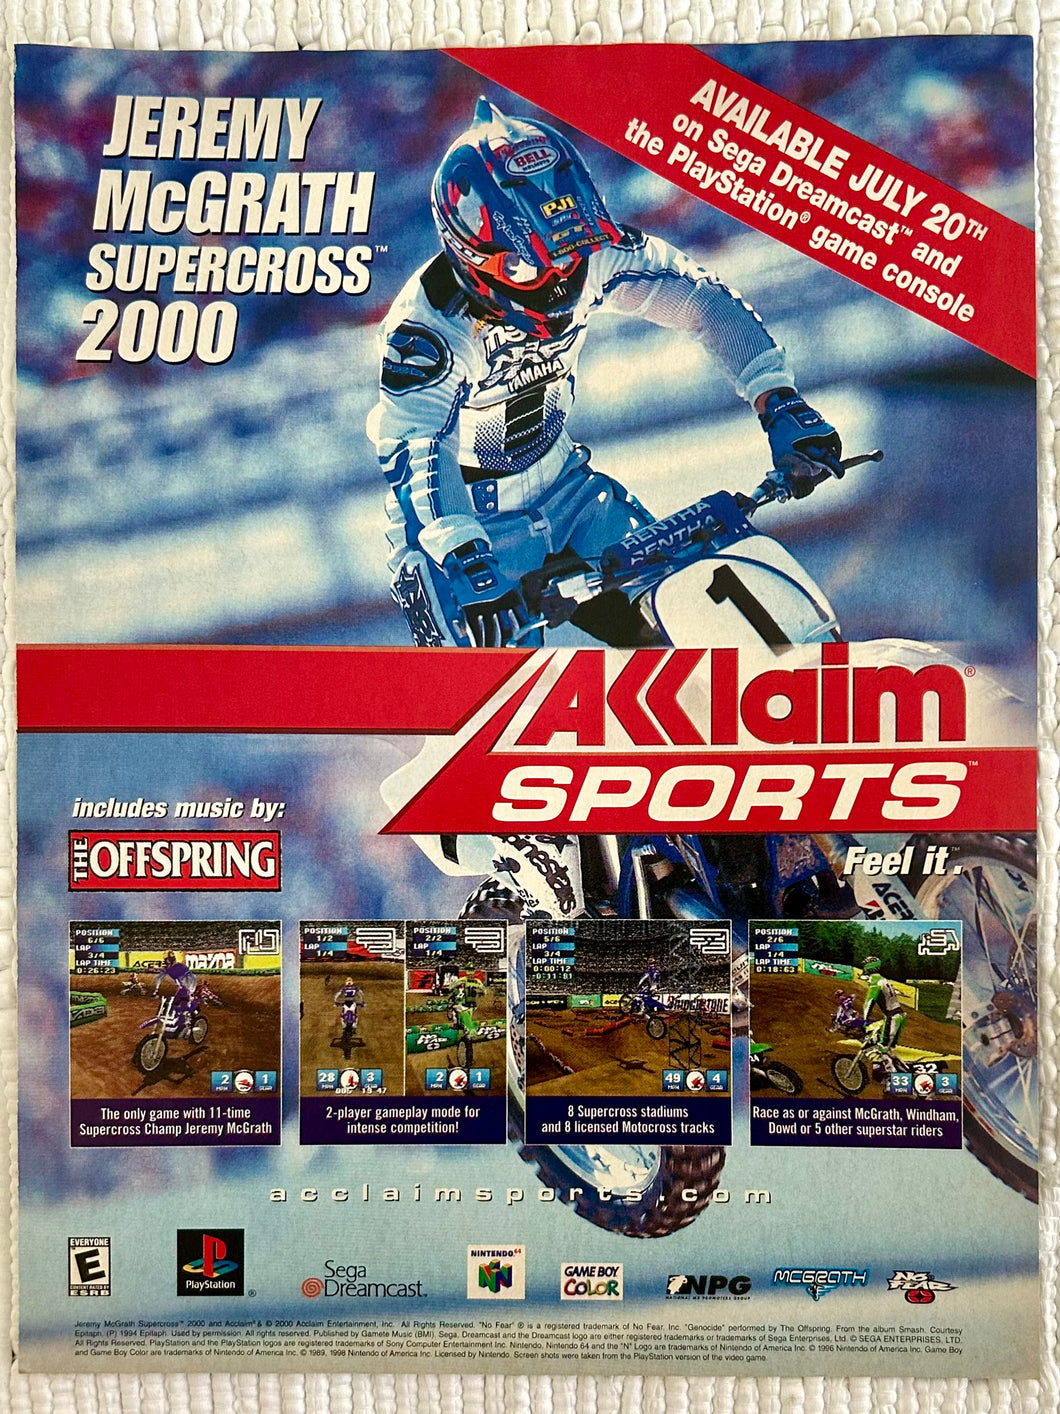 Jeremy McGrath Supercross 2000 - Dreamcast PlayStation N64 - Original Vintage Advertisement - Print Ads - Laminated A4 Poster